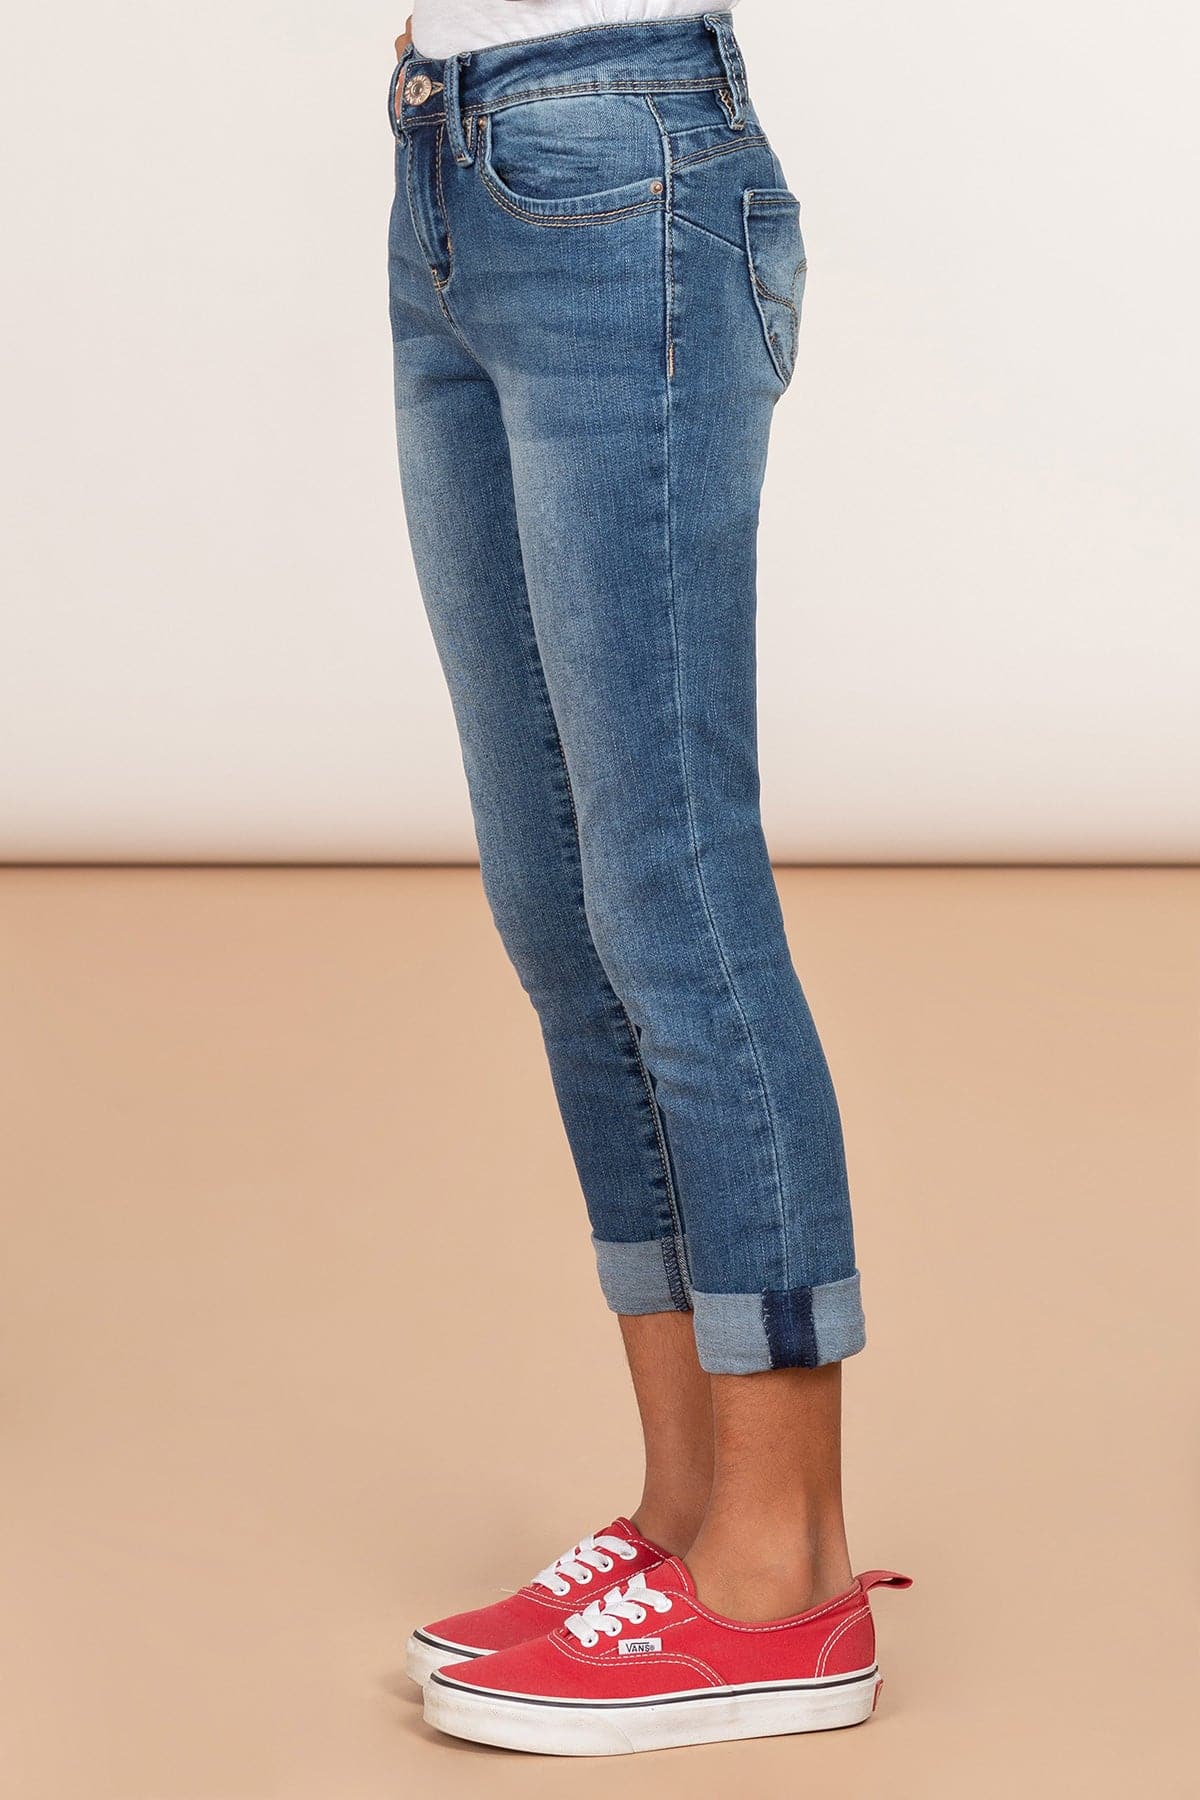 Cuffed WannaBettaFit – YMI JEANS Skinny from Jeans YMI Girls